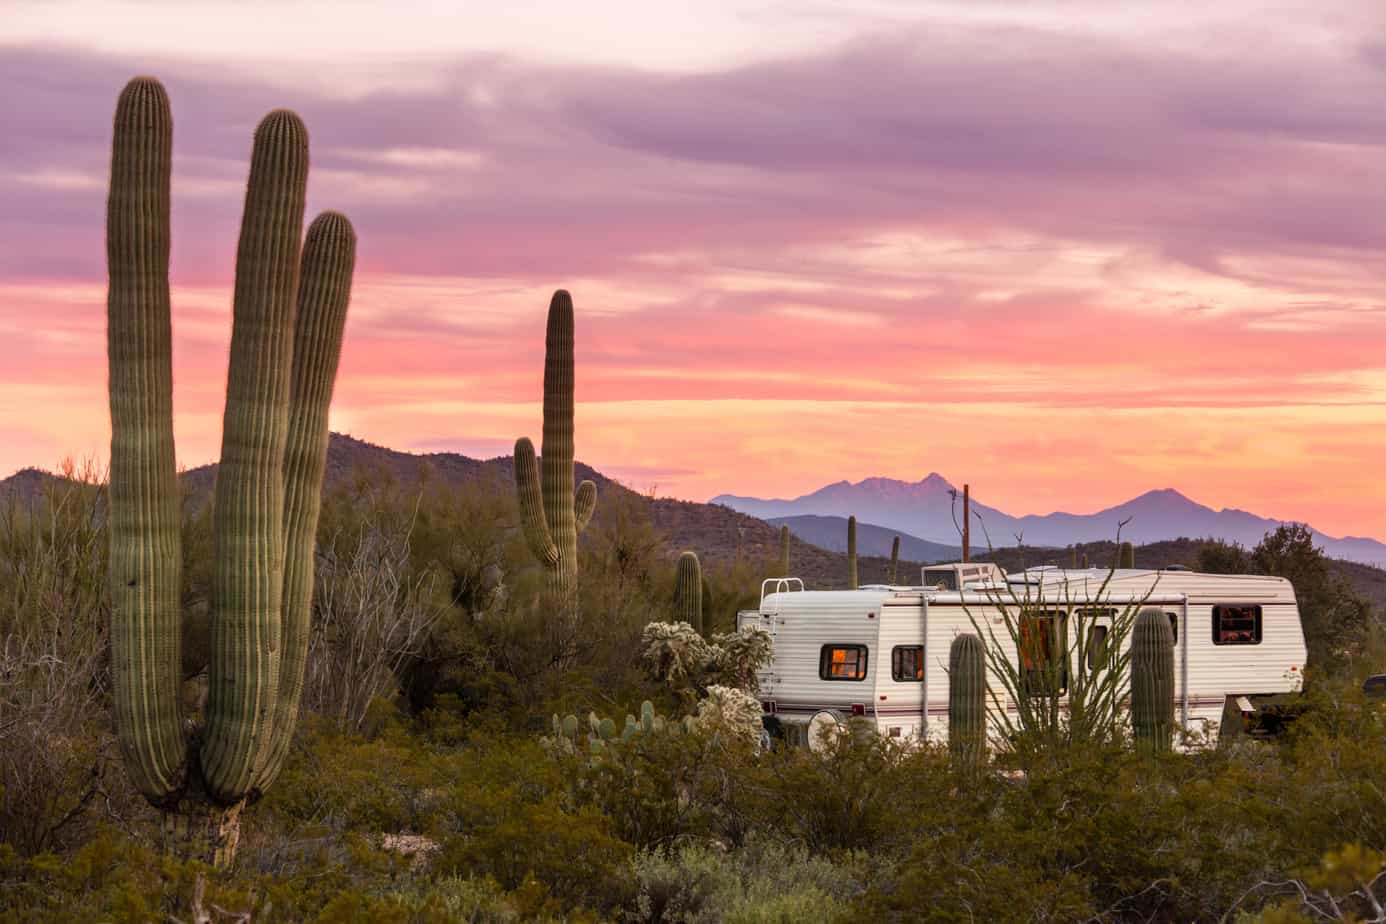 Large cacti surround a white camper under a purple sky.